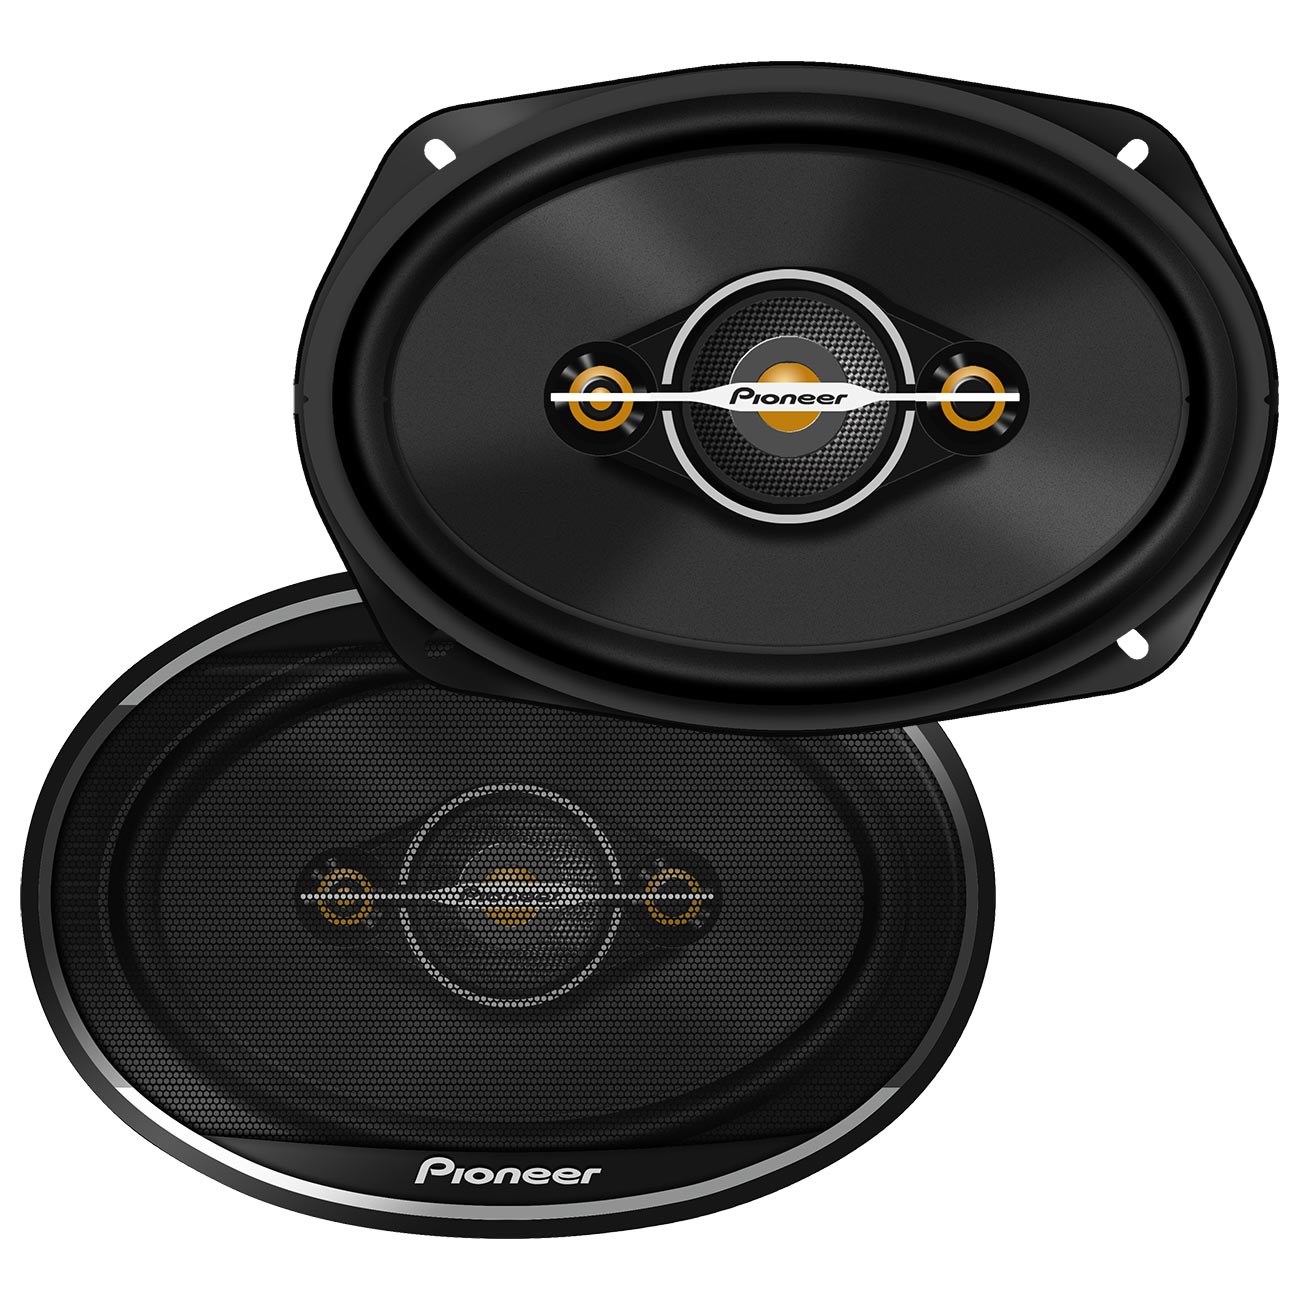 Pioneer 6x9" 4-Way Full Range Speakers (Shallow Mount) - 450 Watts Max / 90 RMS (Pair)